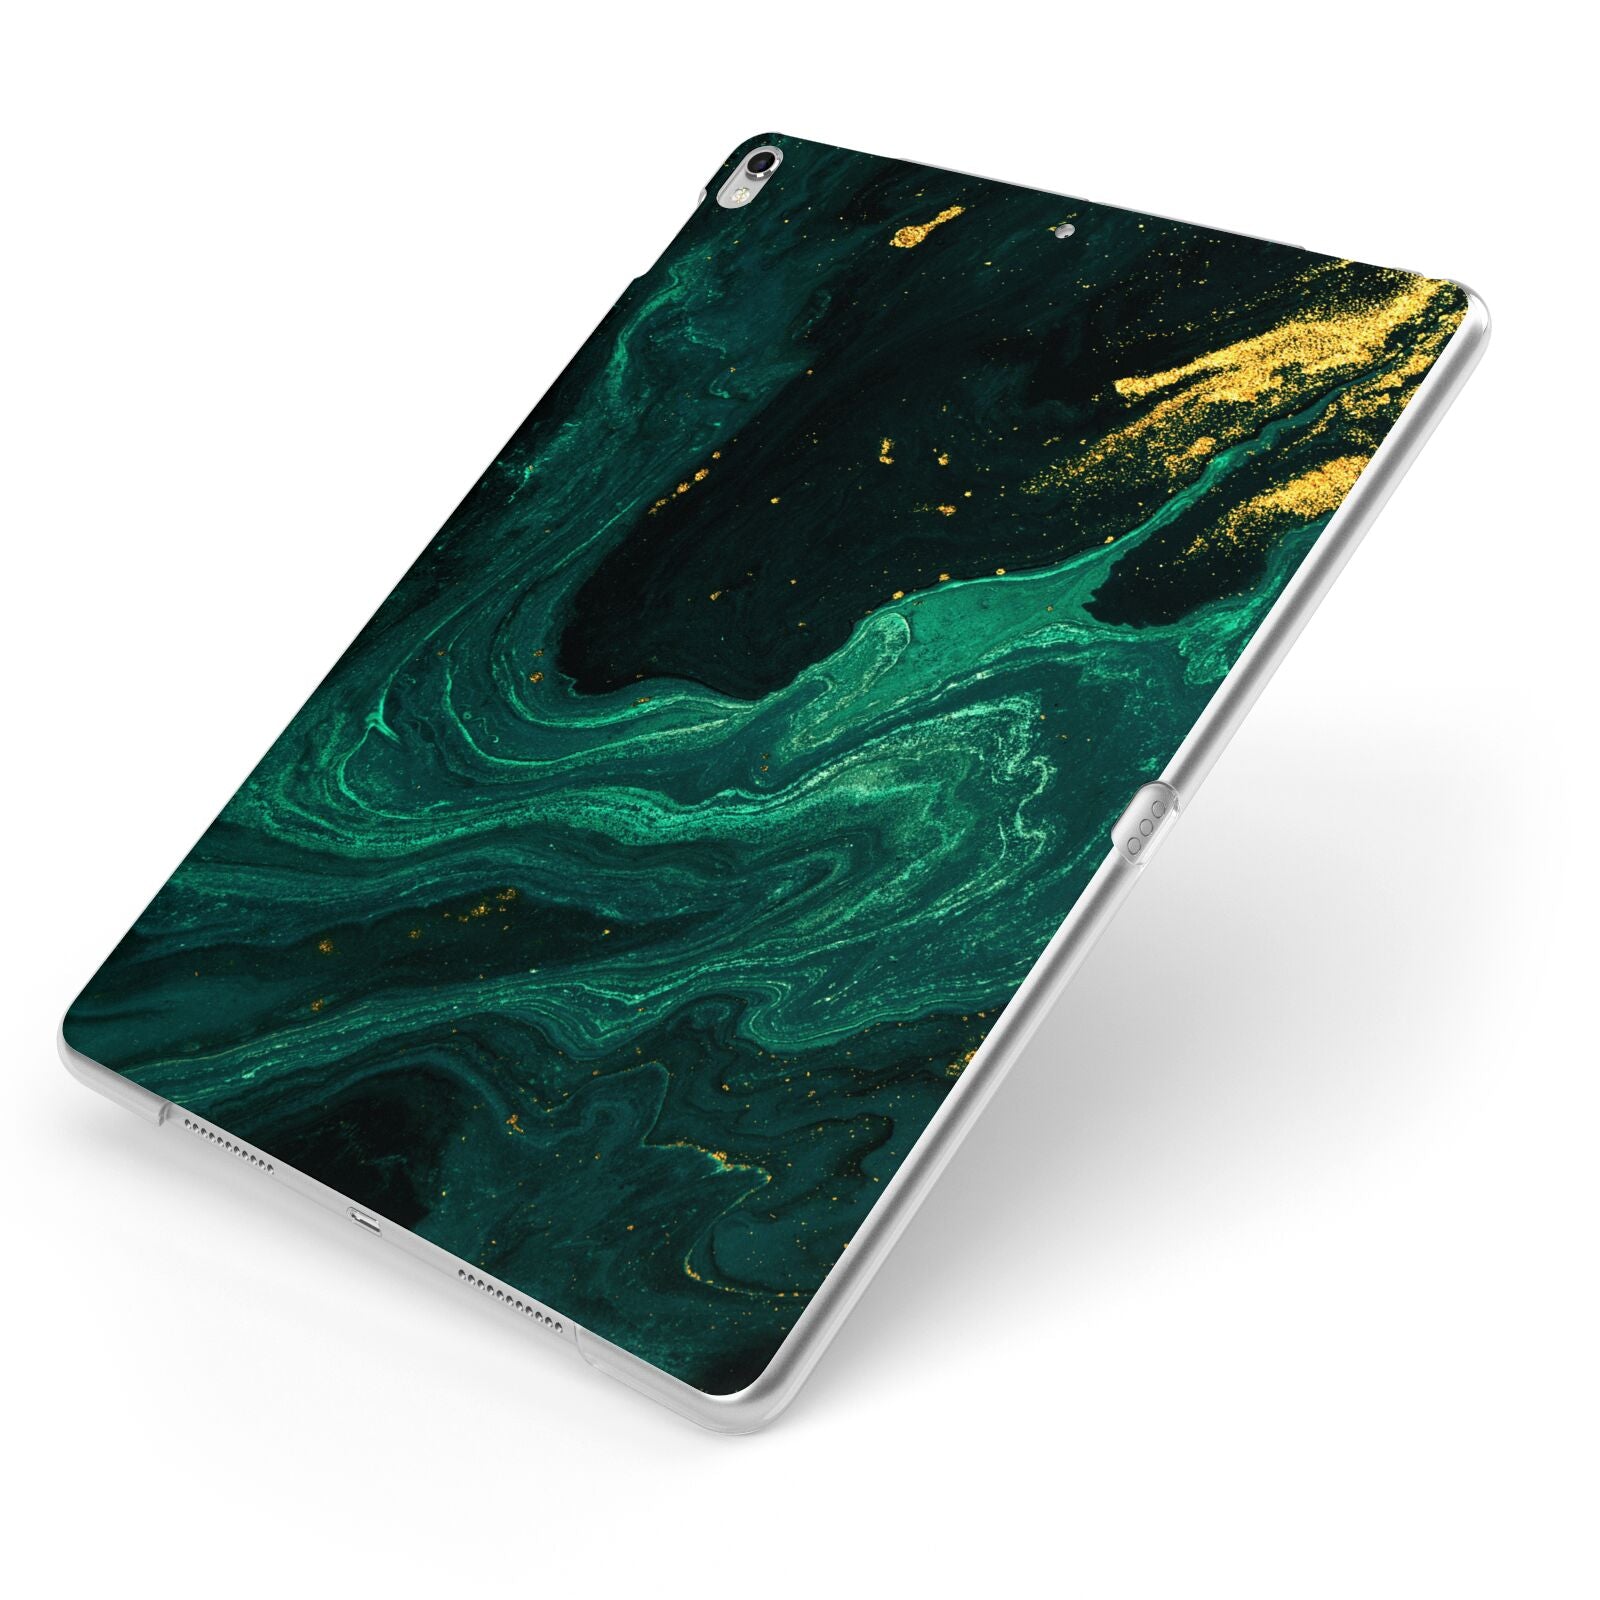 Emerald Green Apple iPad Case on Silver iPad Side View